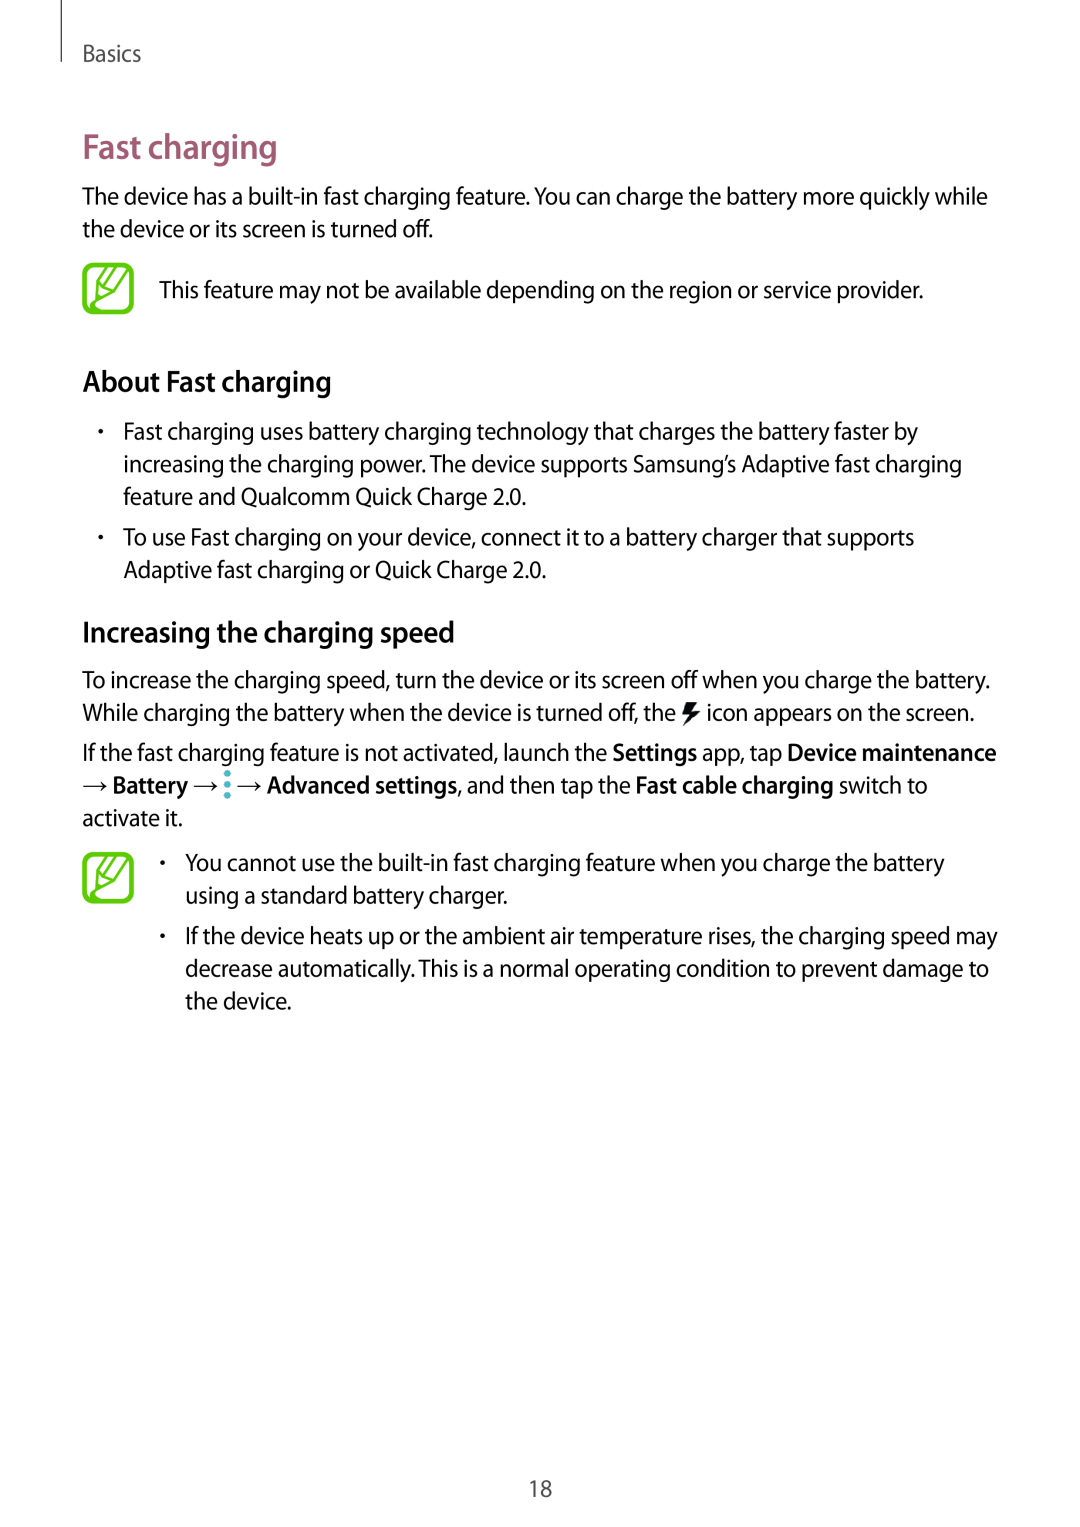 Samsung SM-A320FZINITV, SM-A520FZIADBT, SM-A520FZBADBT manual About Fast charging, Increasing the charging speed, Basics 